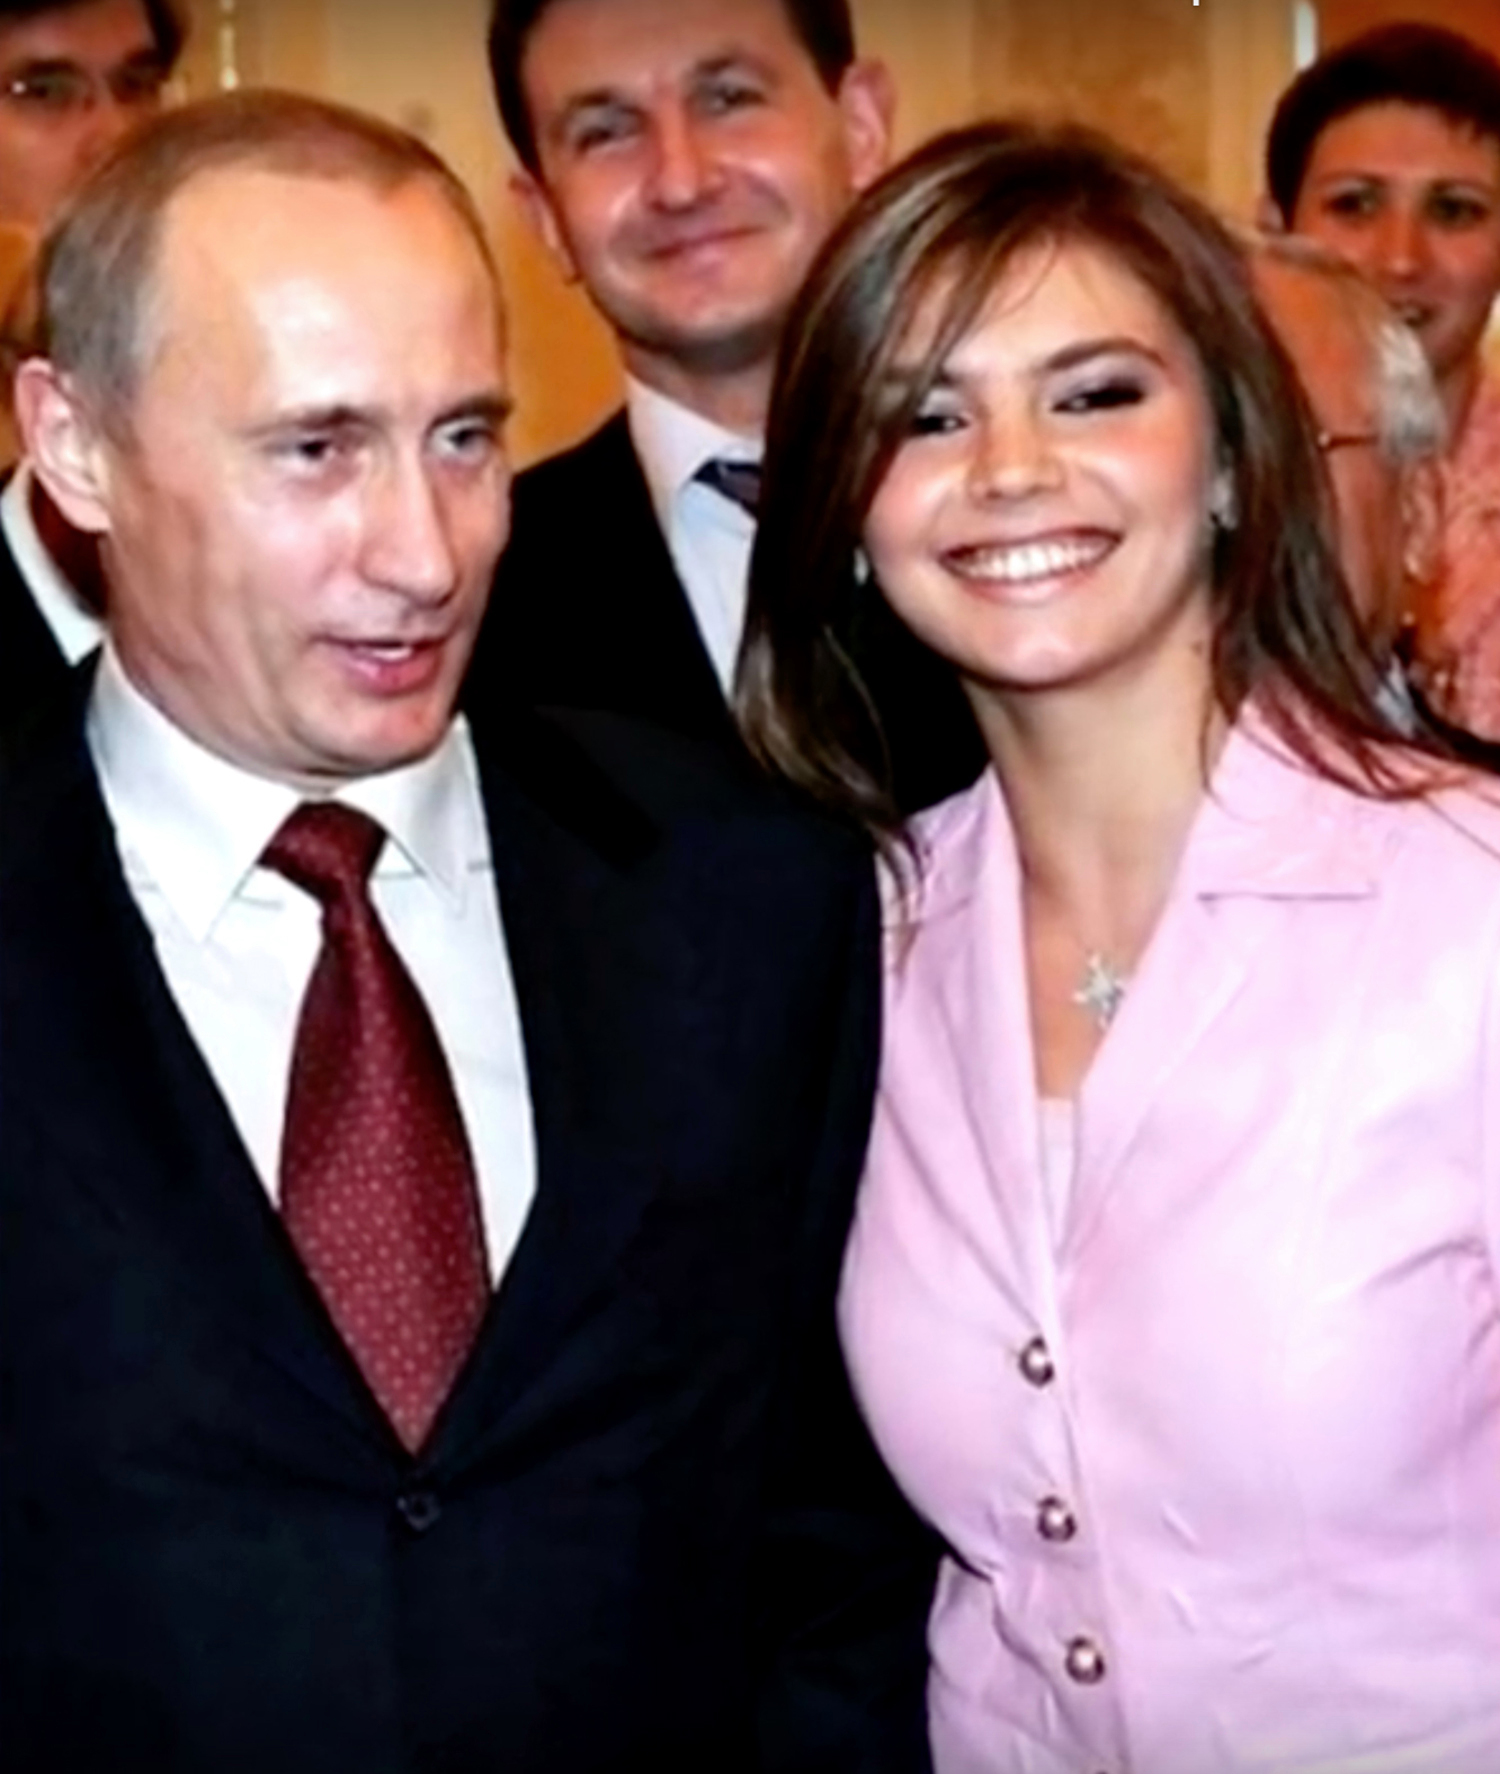  Vladimir Poutine, Alina Kabaeva @ East2west News